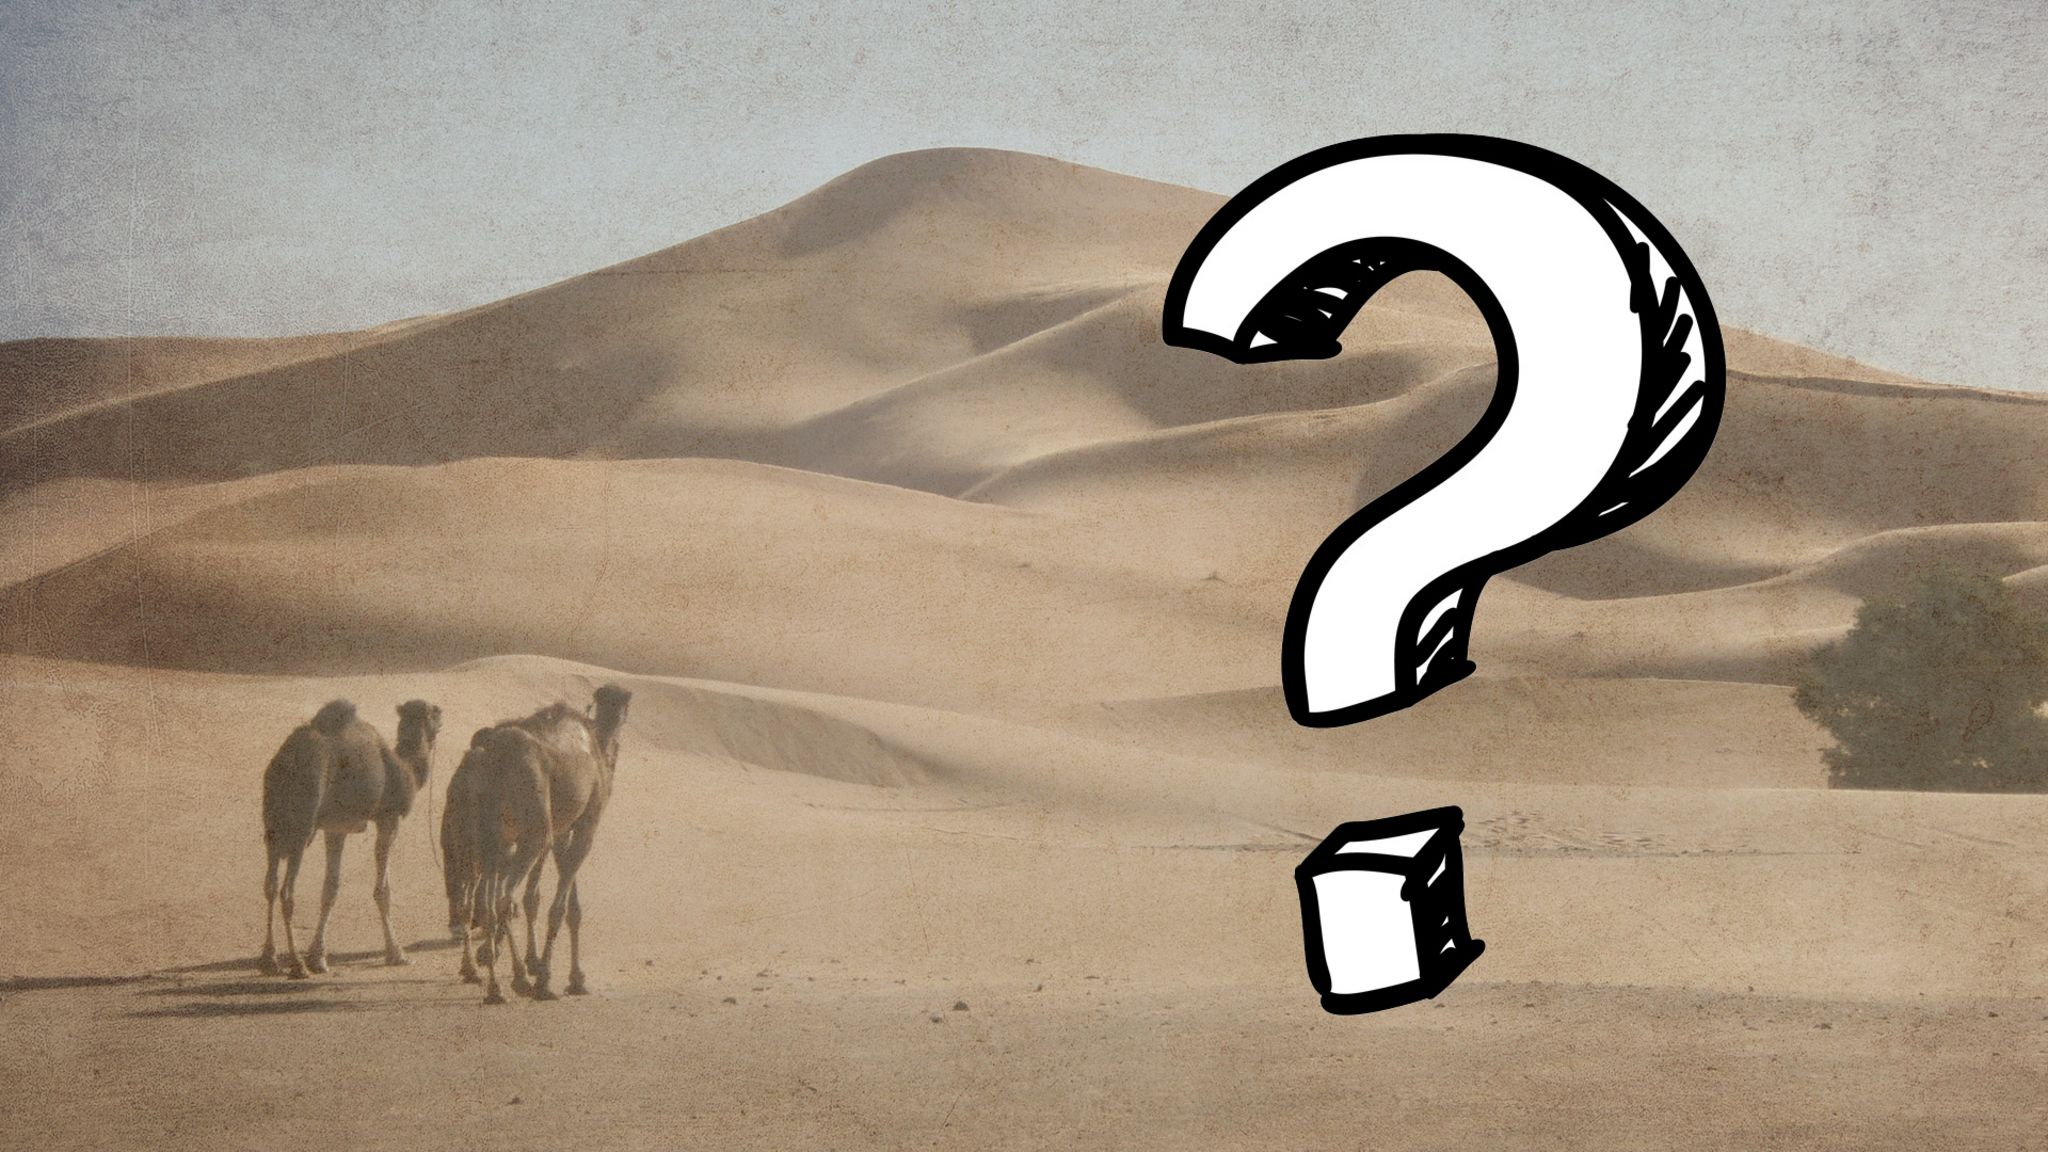 Camels dune question mark